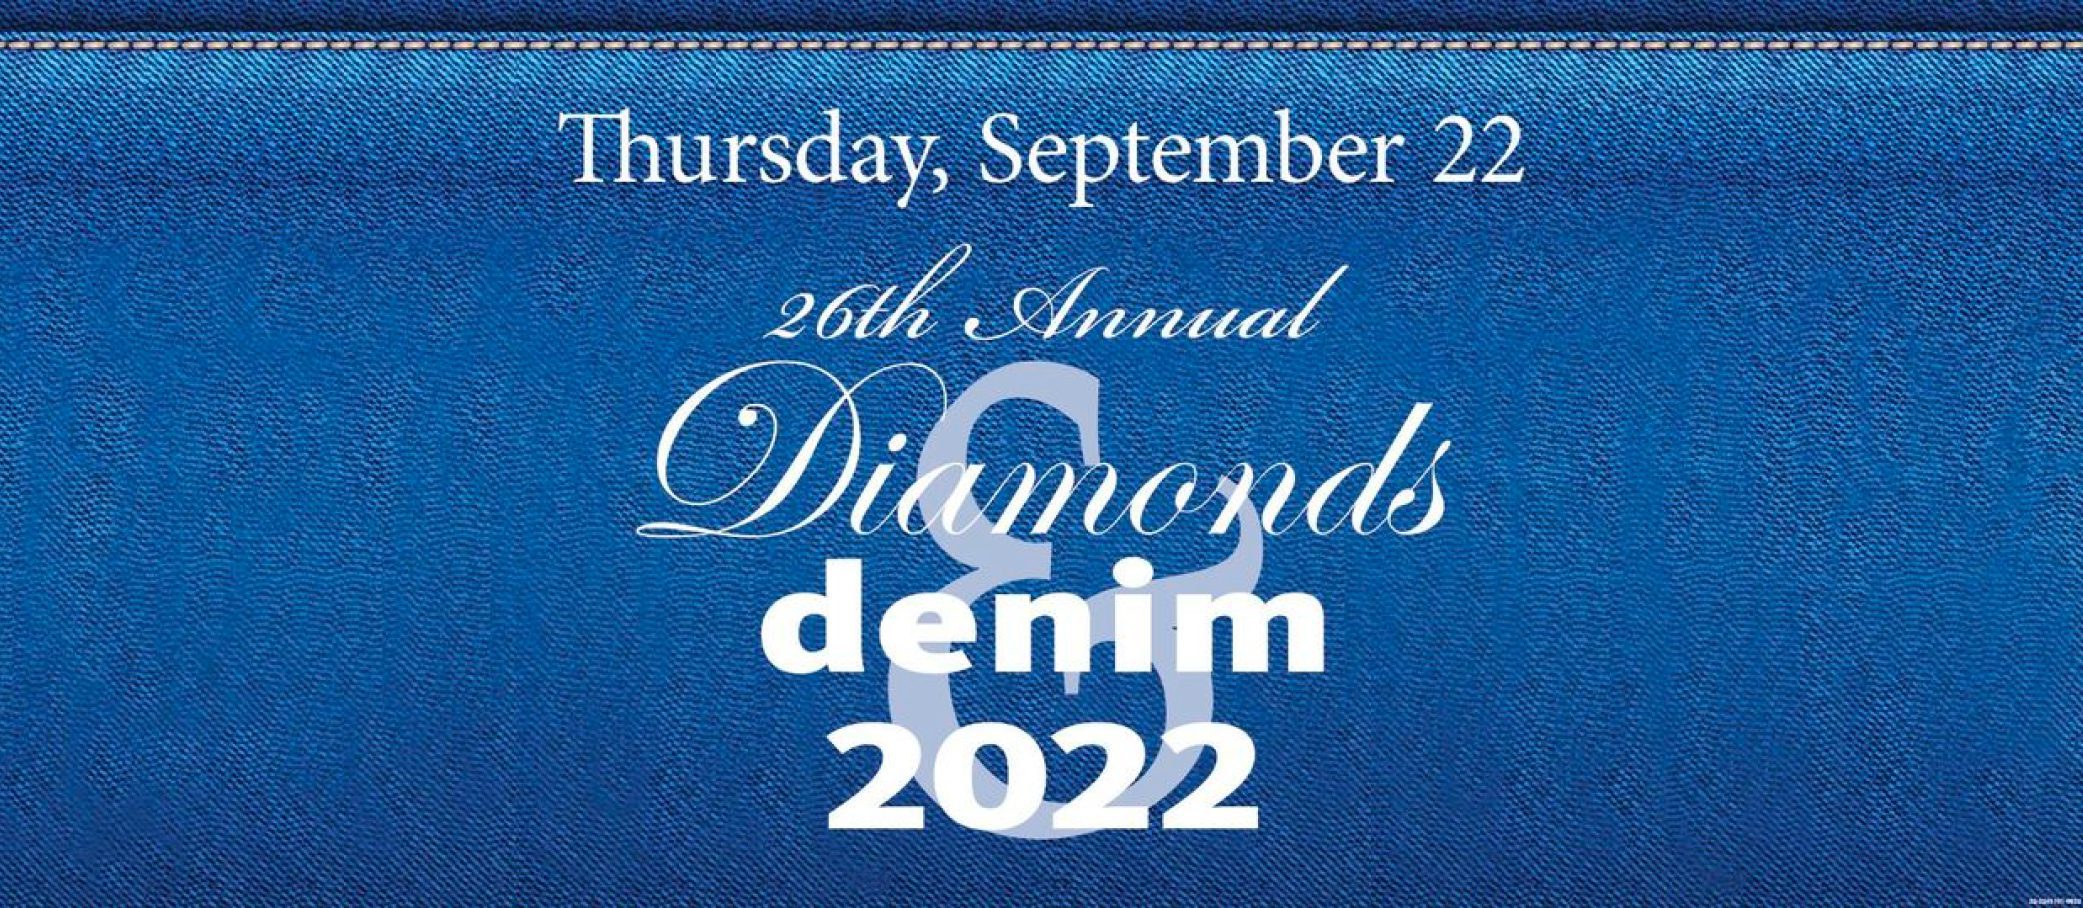 Diamonds and Denim Fundraiser event September 22 2022